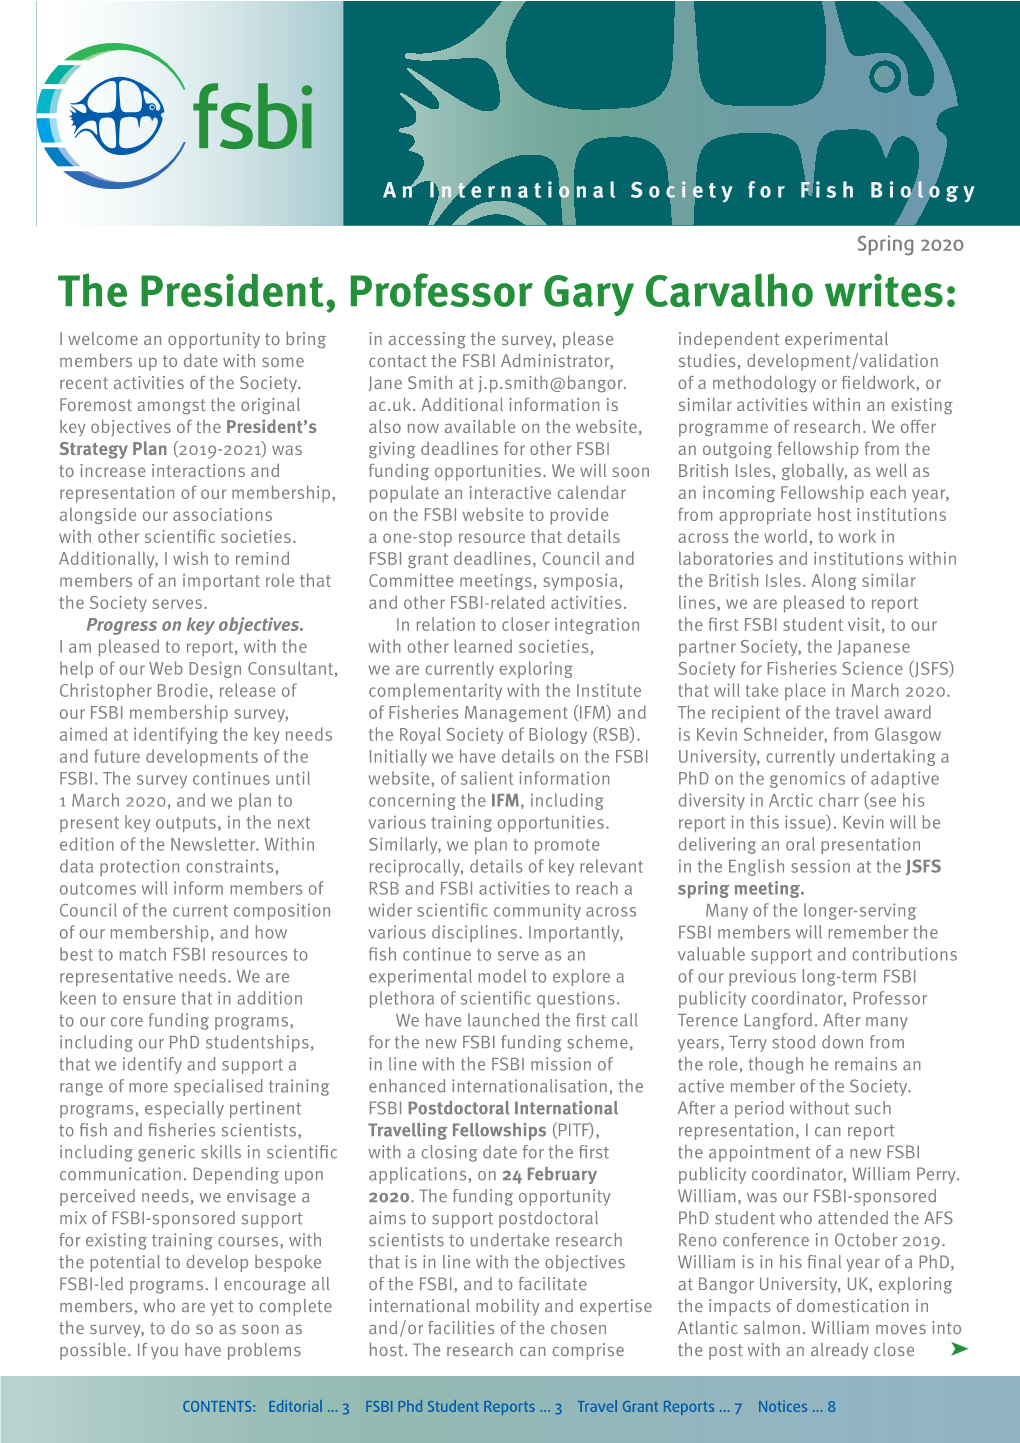 The President, Professor Gary Carvalho Writes